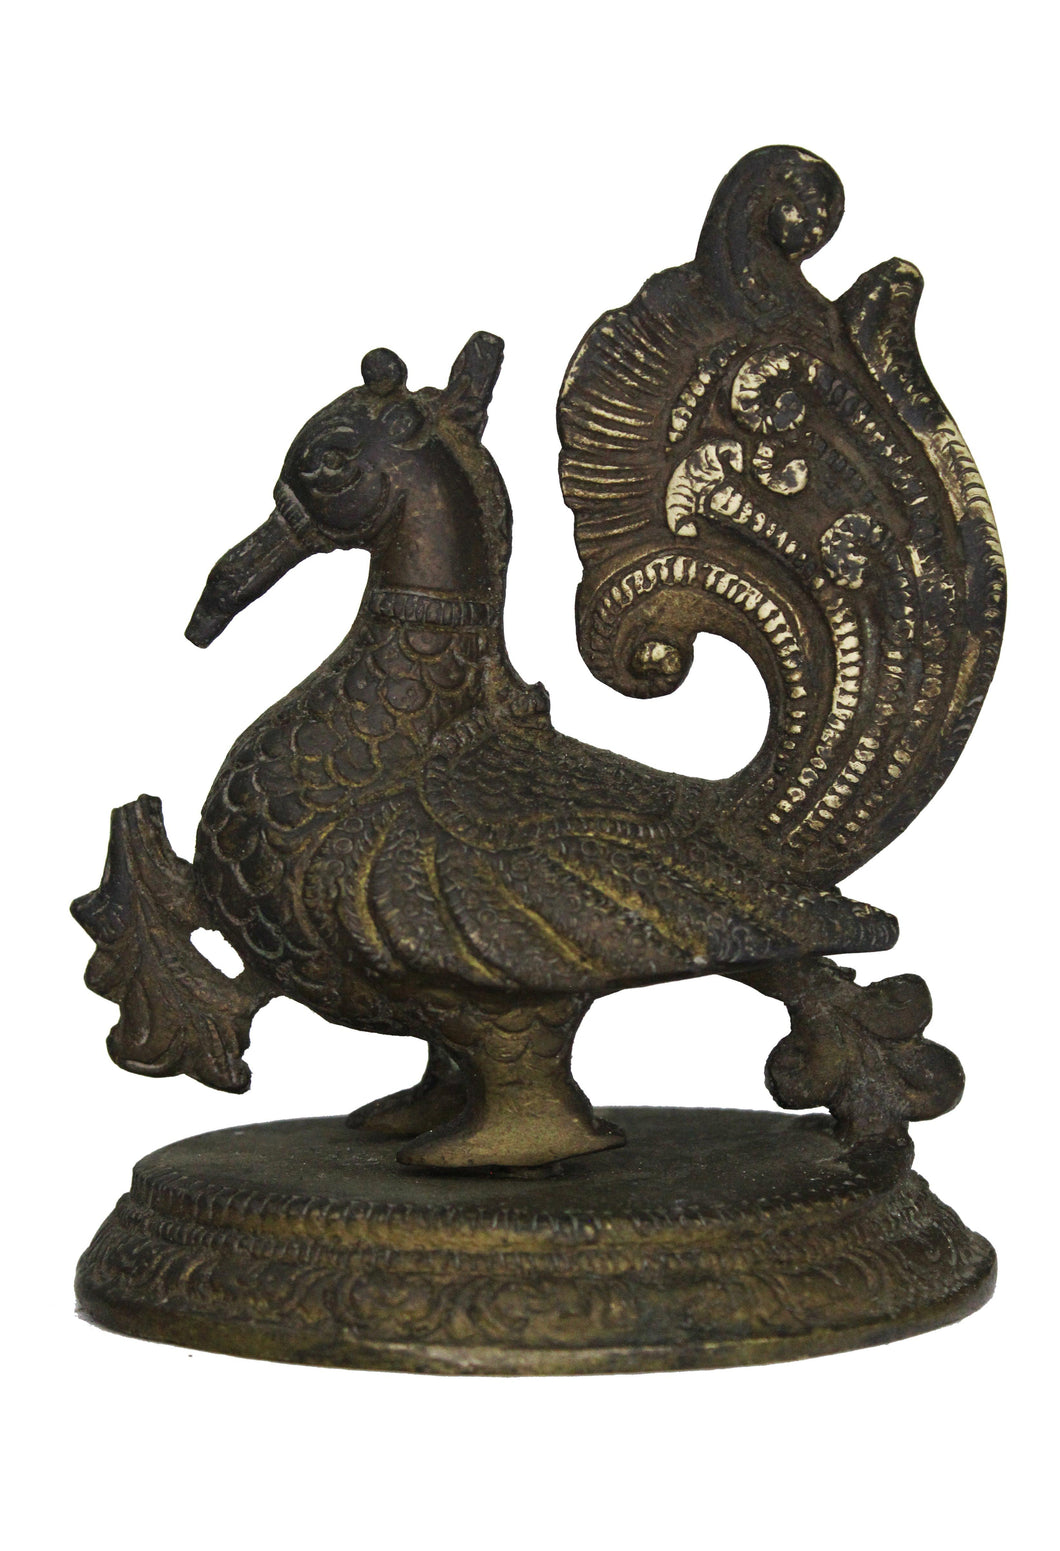 Vintage Decorative Eye Catching Hamsa Bird Statue Size 11 x 7.5 x 12.5 cm - Style It by Hanika